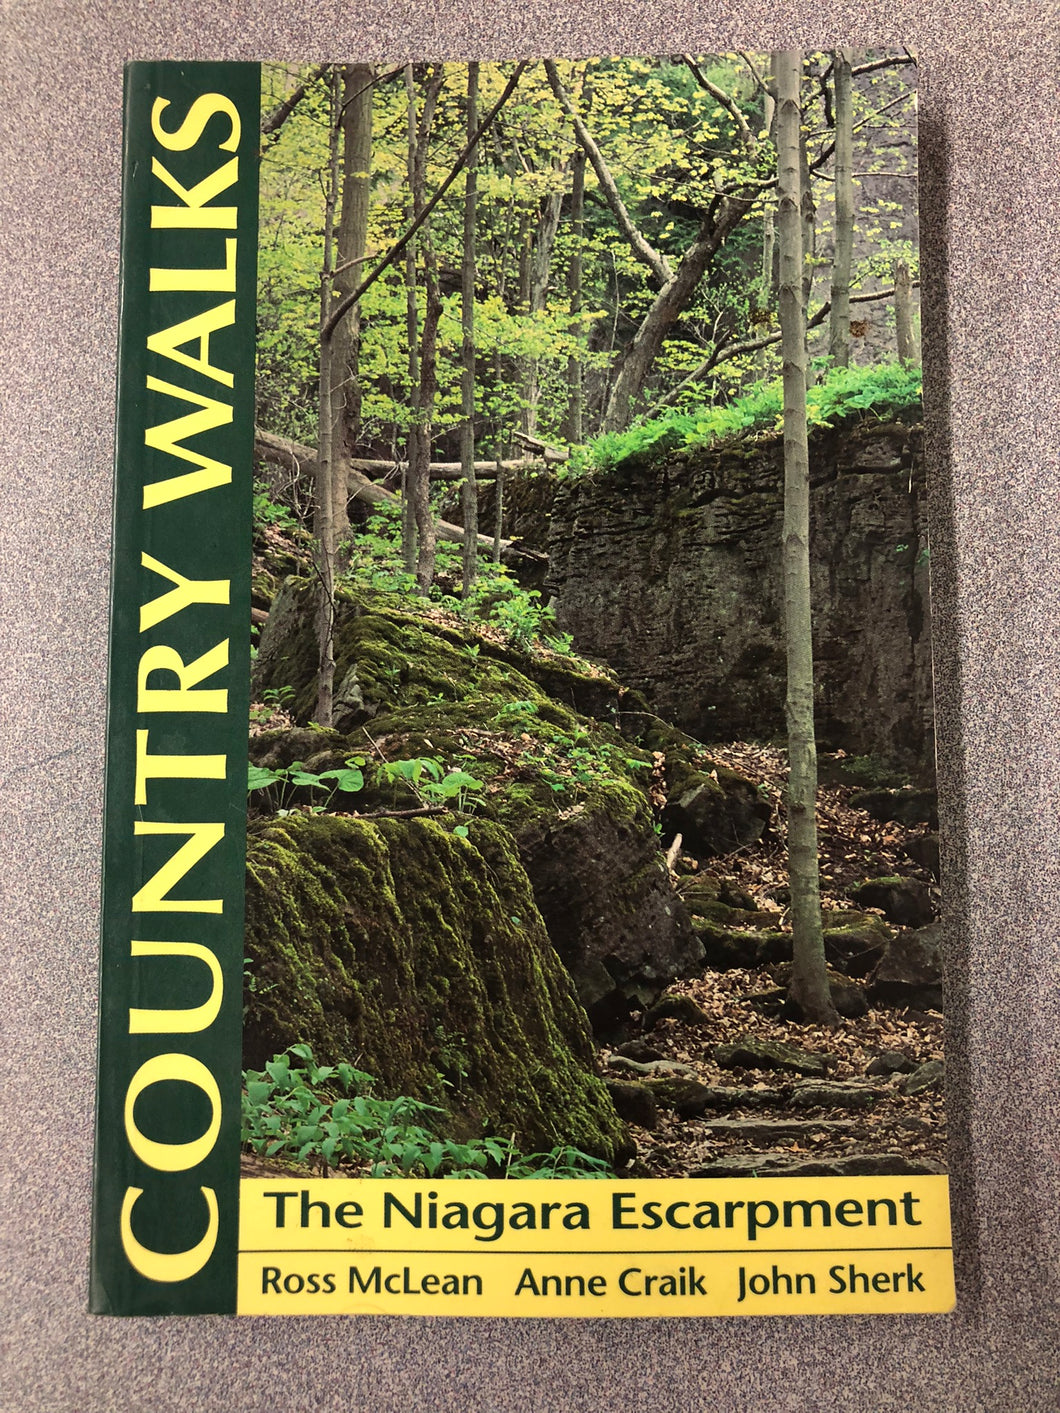 Country Walks: The Niagara Escarpment, McLean, Ross et al, [1994] OU 5/22